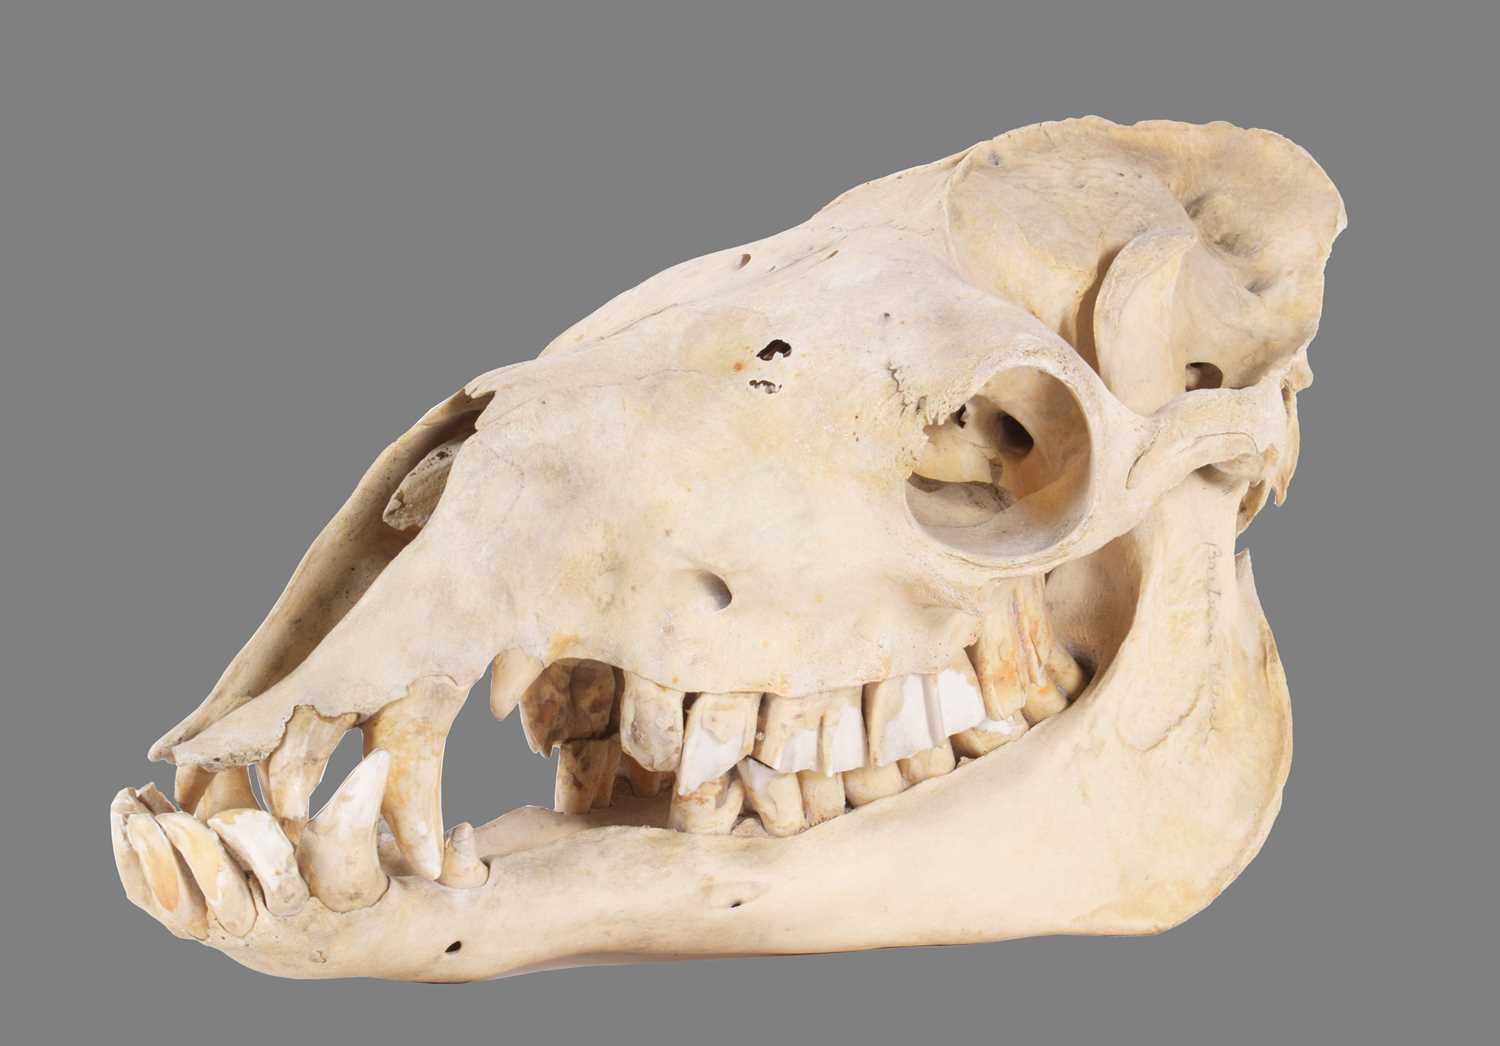 Skulls/Anatomy: Bactrian Camel Skull (Camelus bactrianus), circa early-mid 20th century, an